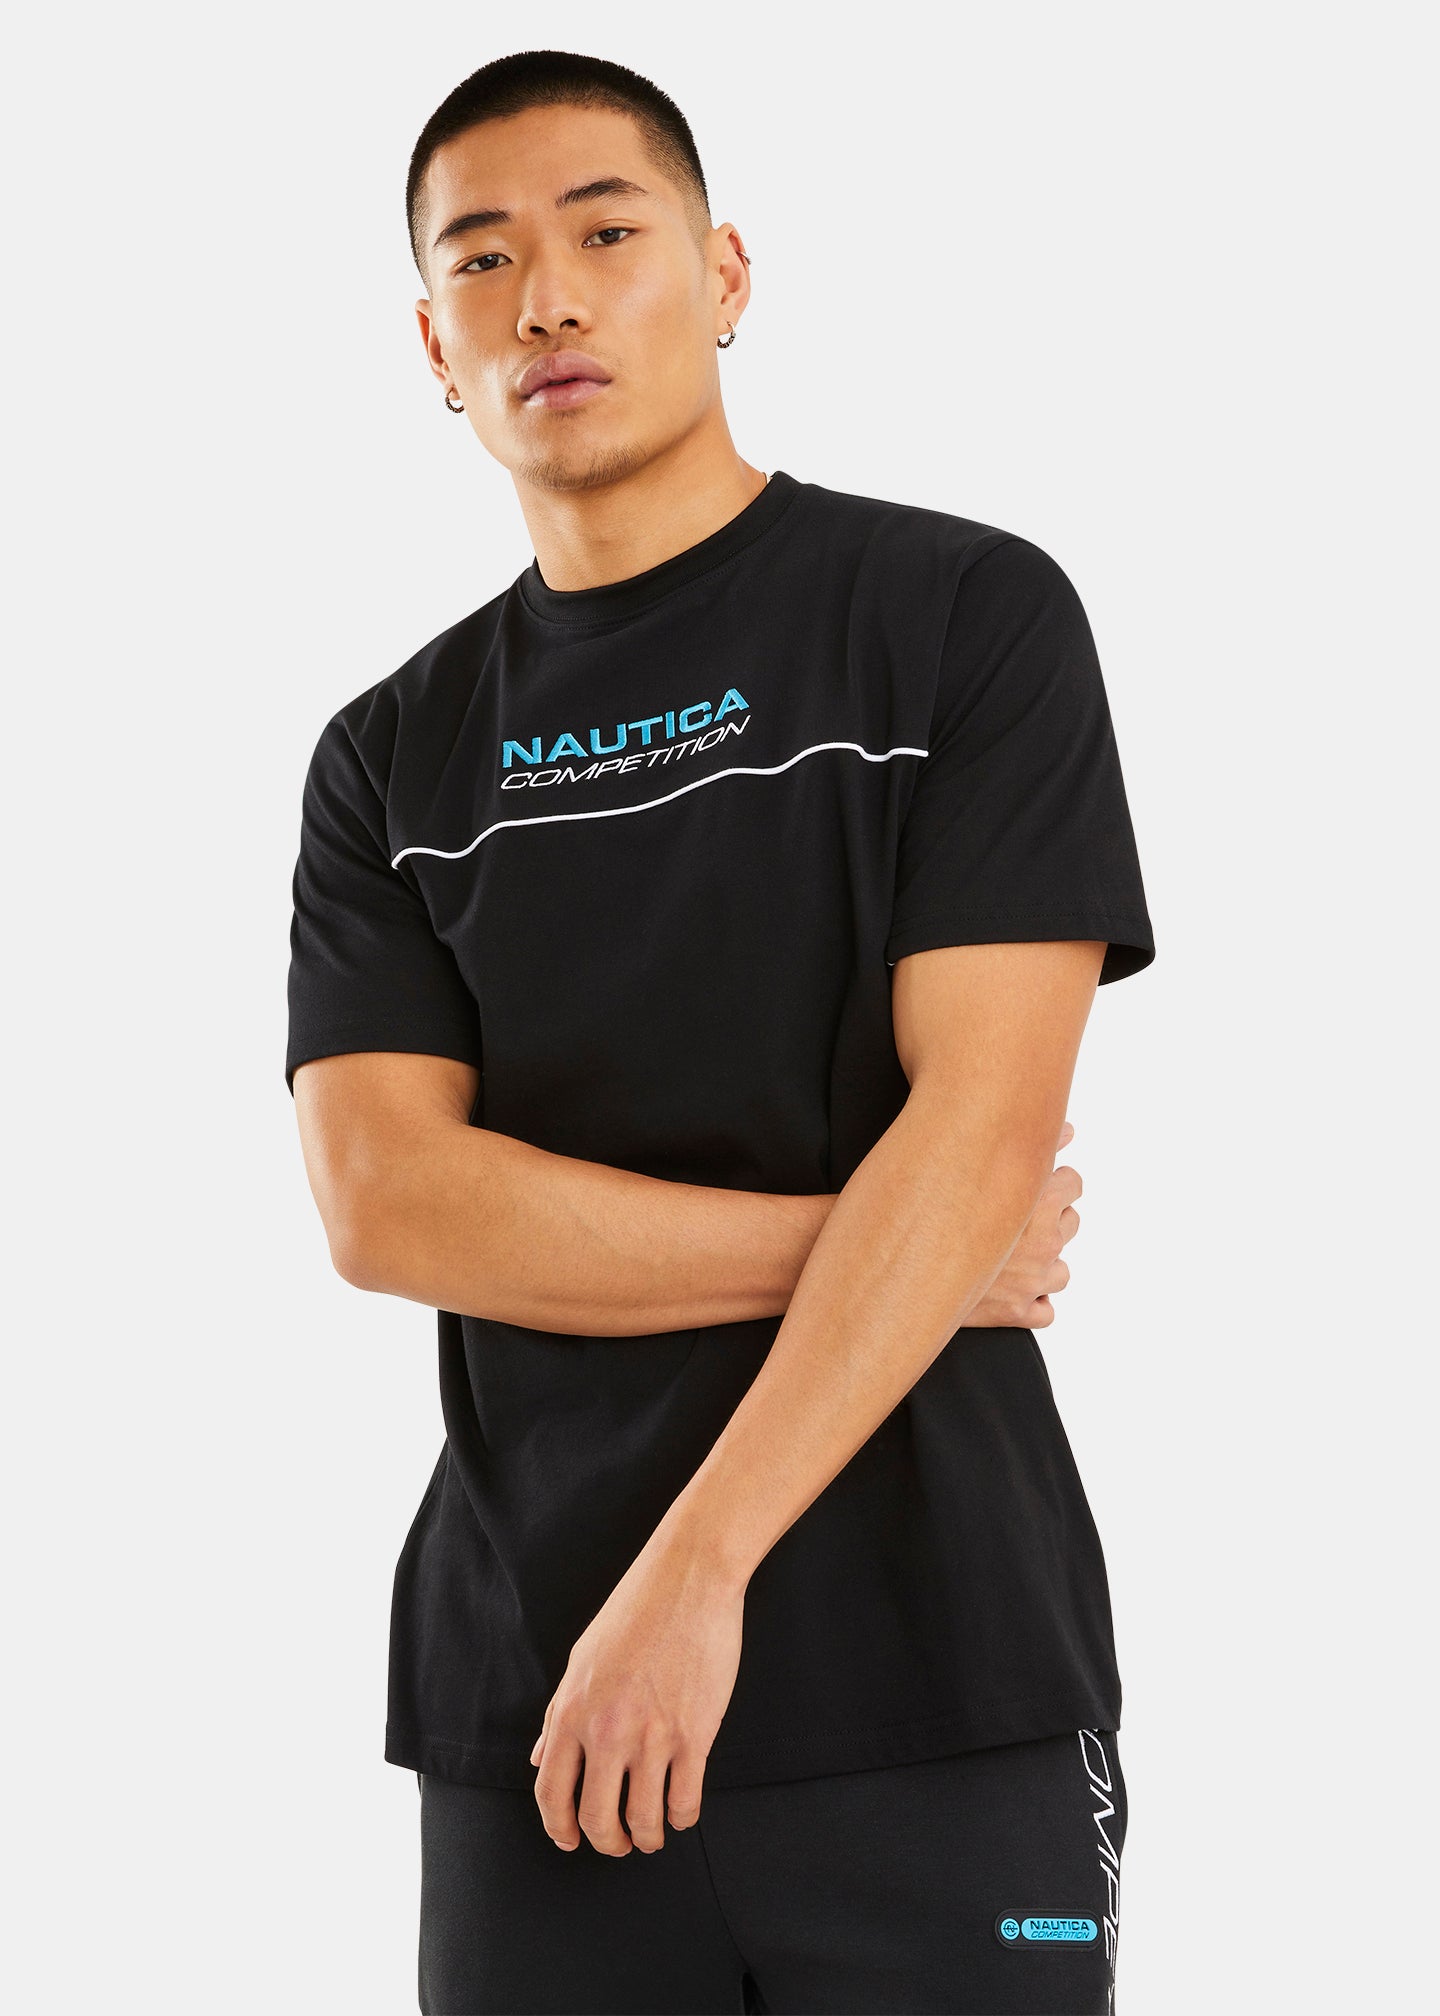 Nautica Competition Barret T-Shirt - Black - Front